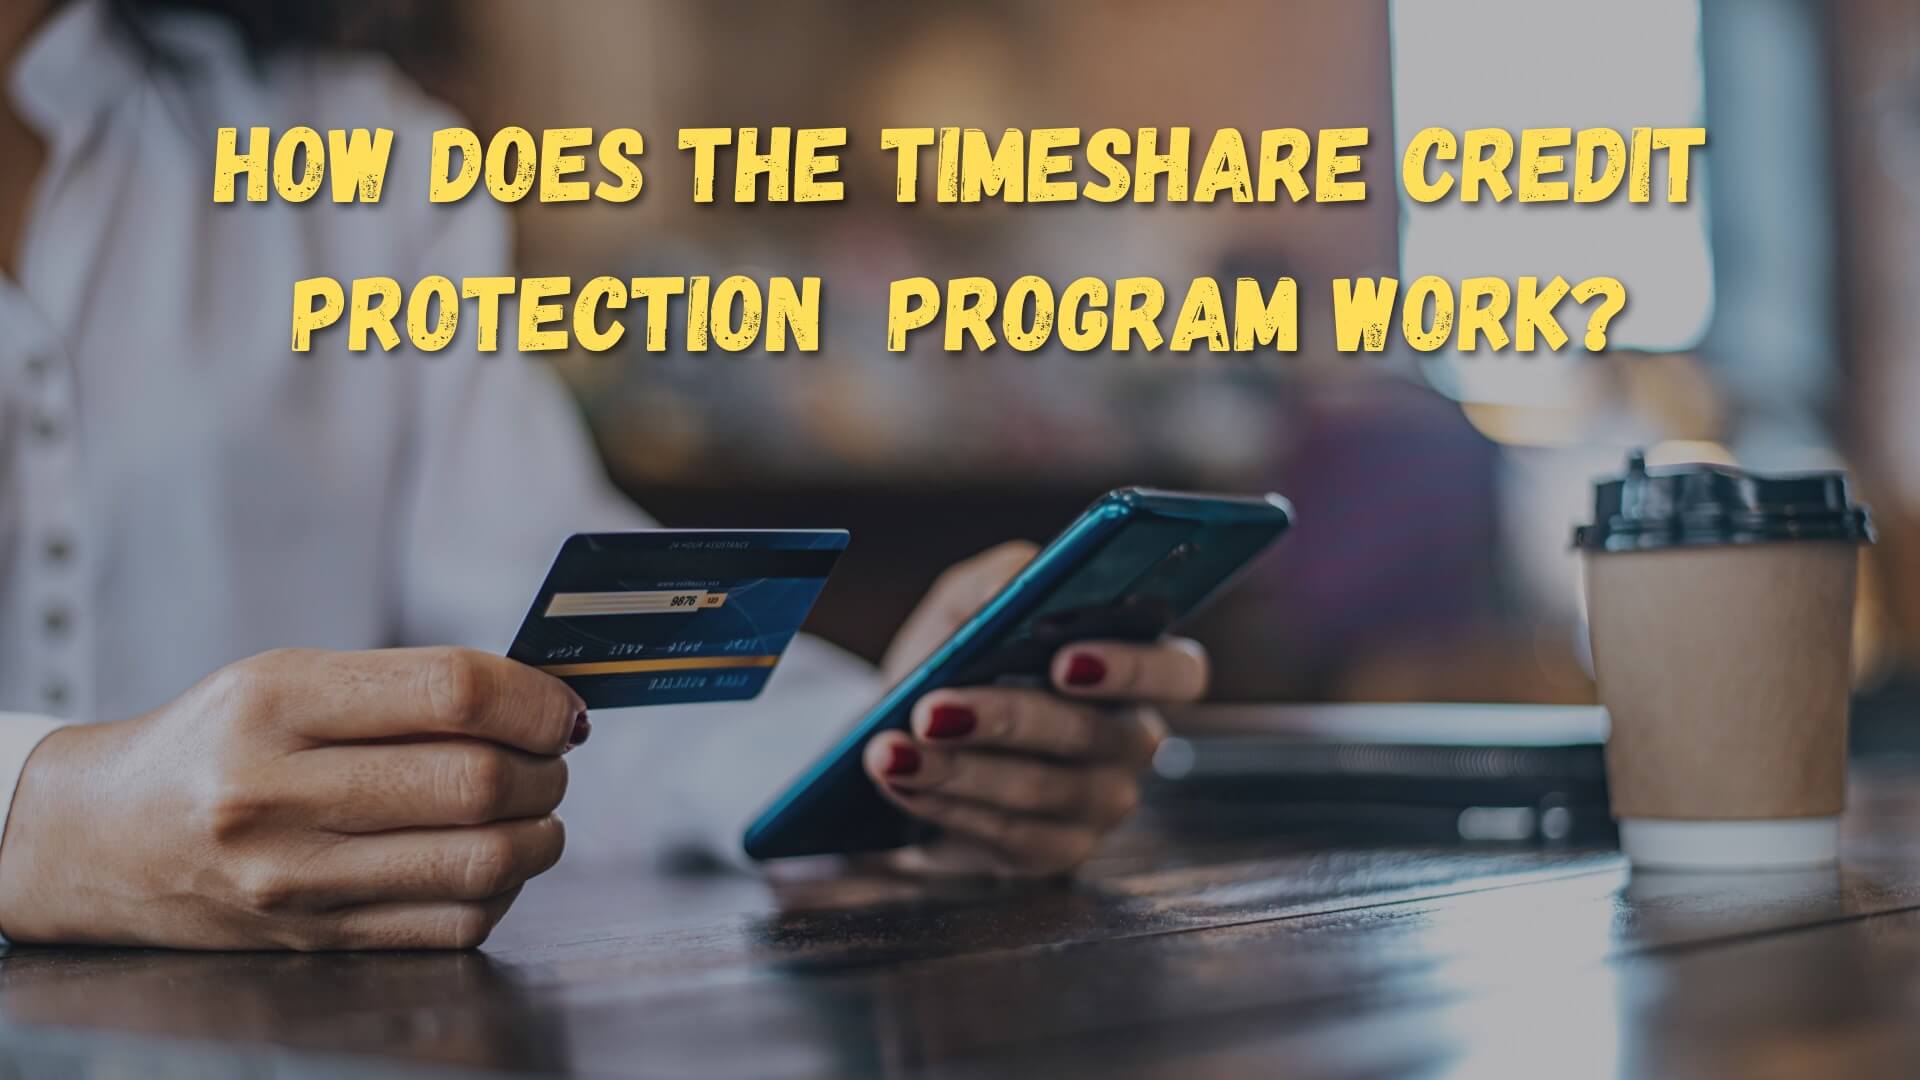 TIMESHARE CREDIT PROTECTION PROGRAM